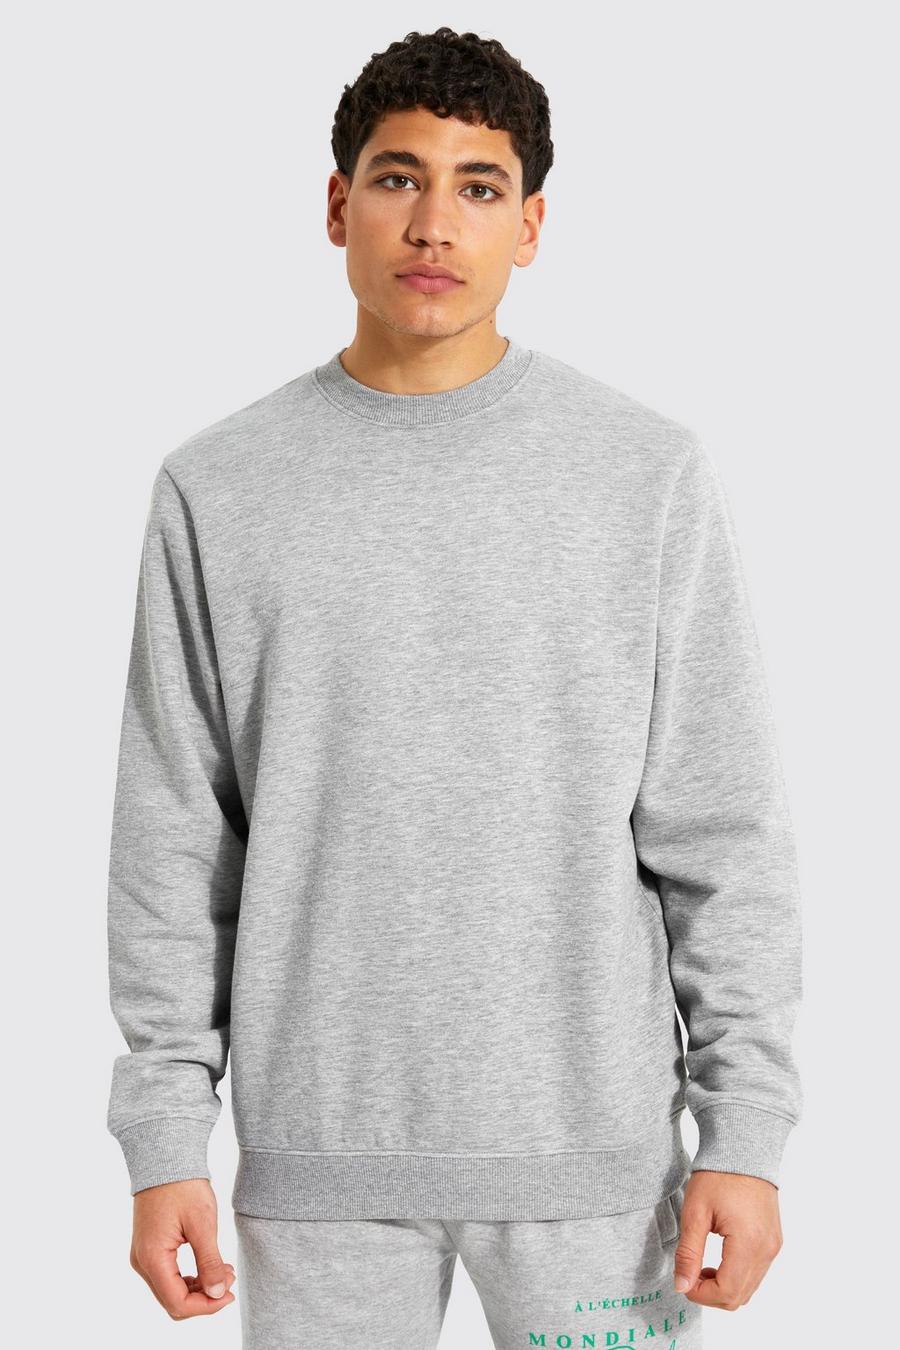 Grey Basic Crew Neck Sweatshirt with REEL Cotton